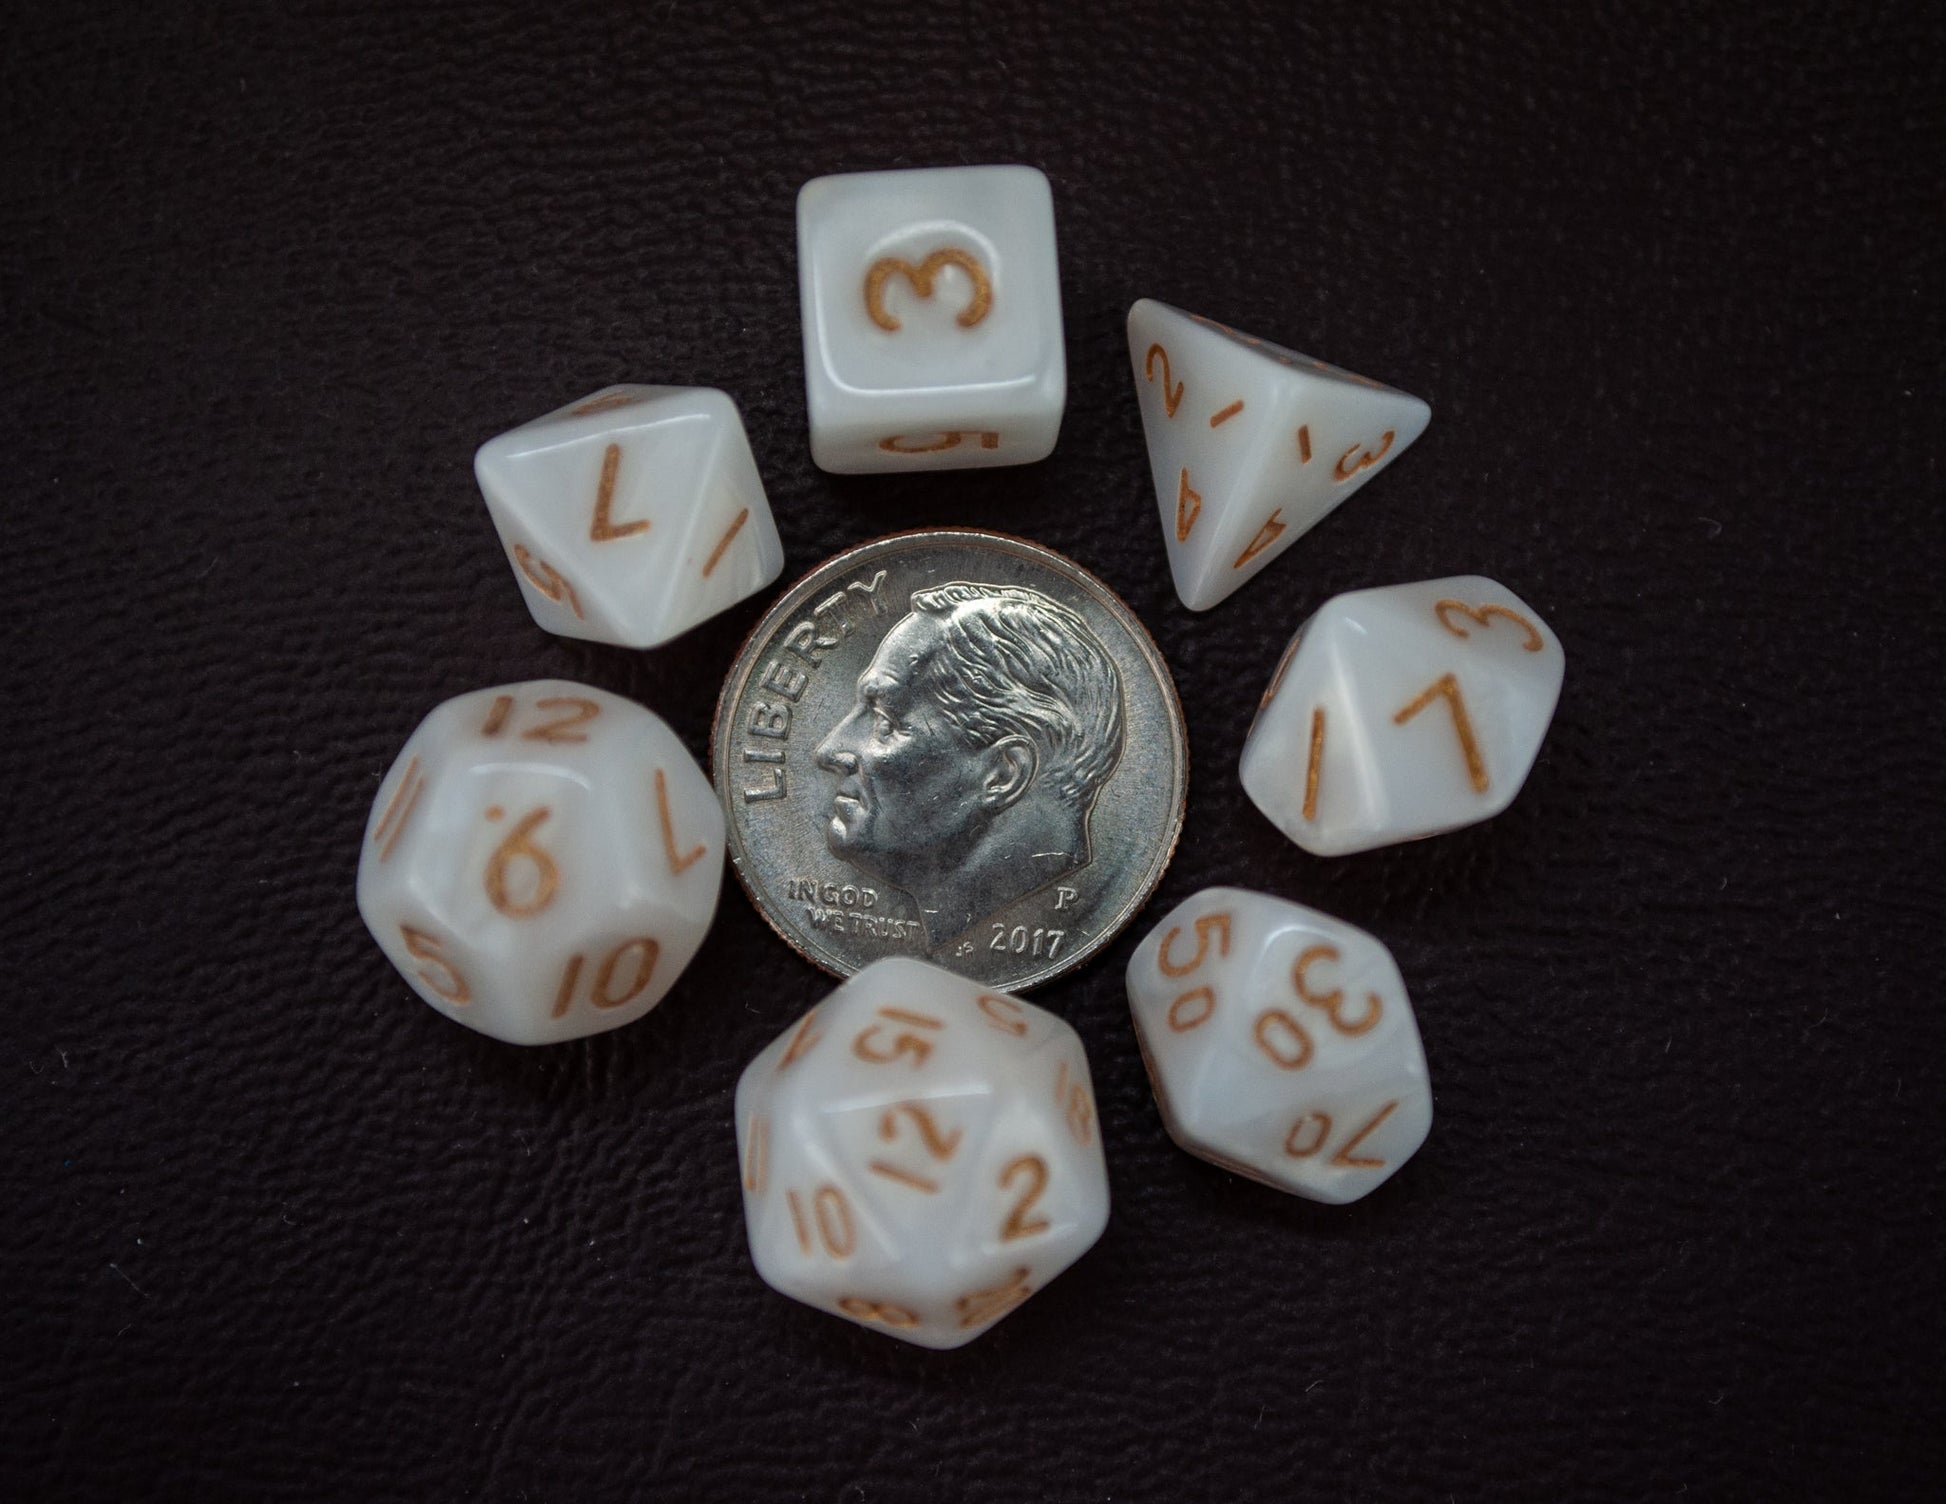 dnd mini dice set, pearl white color - Rowan Gate